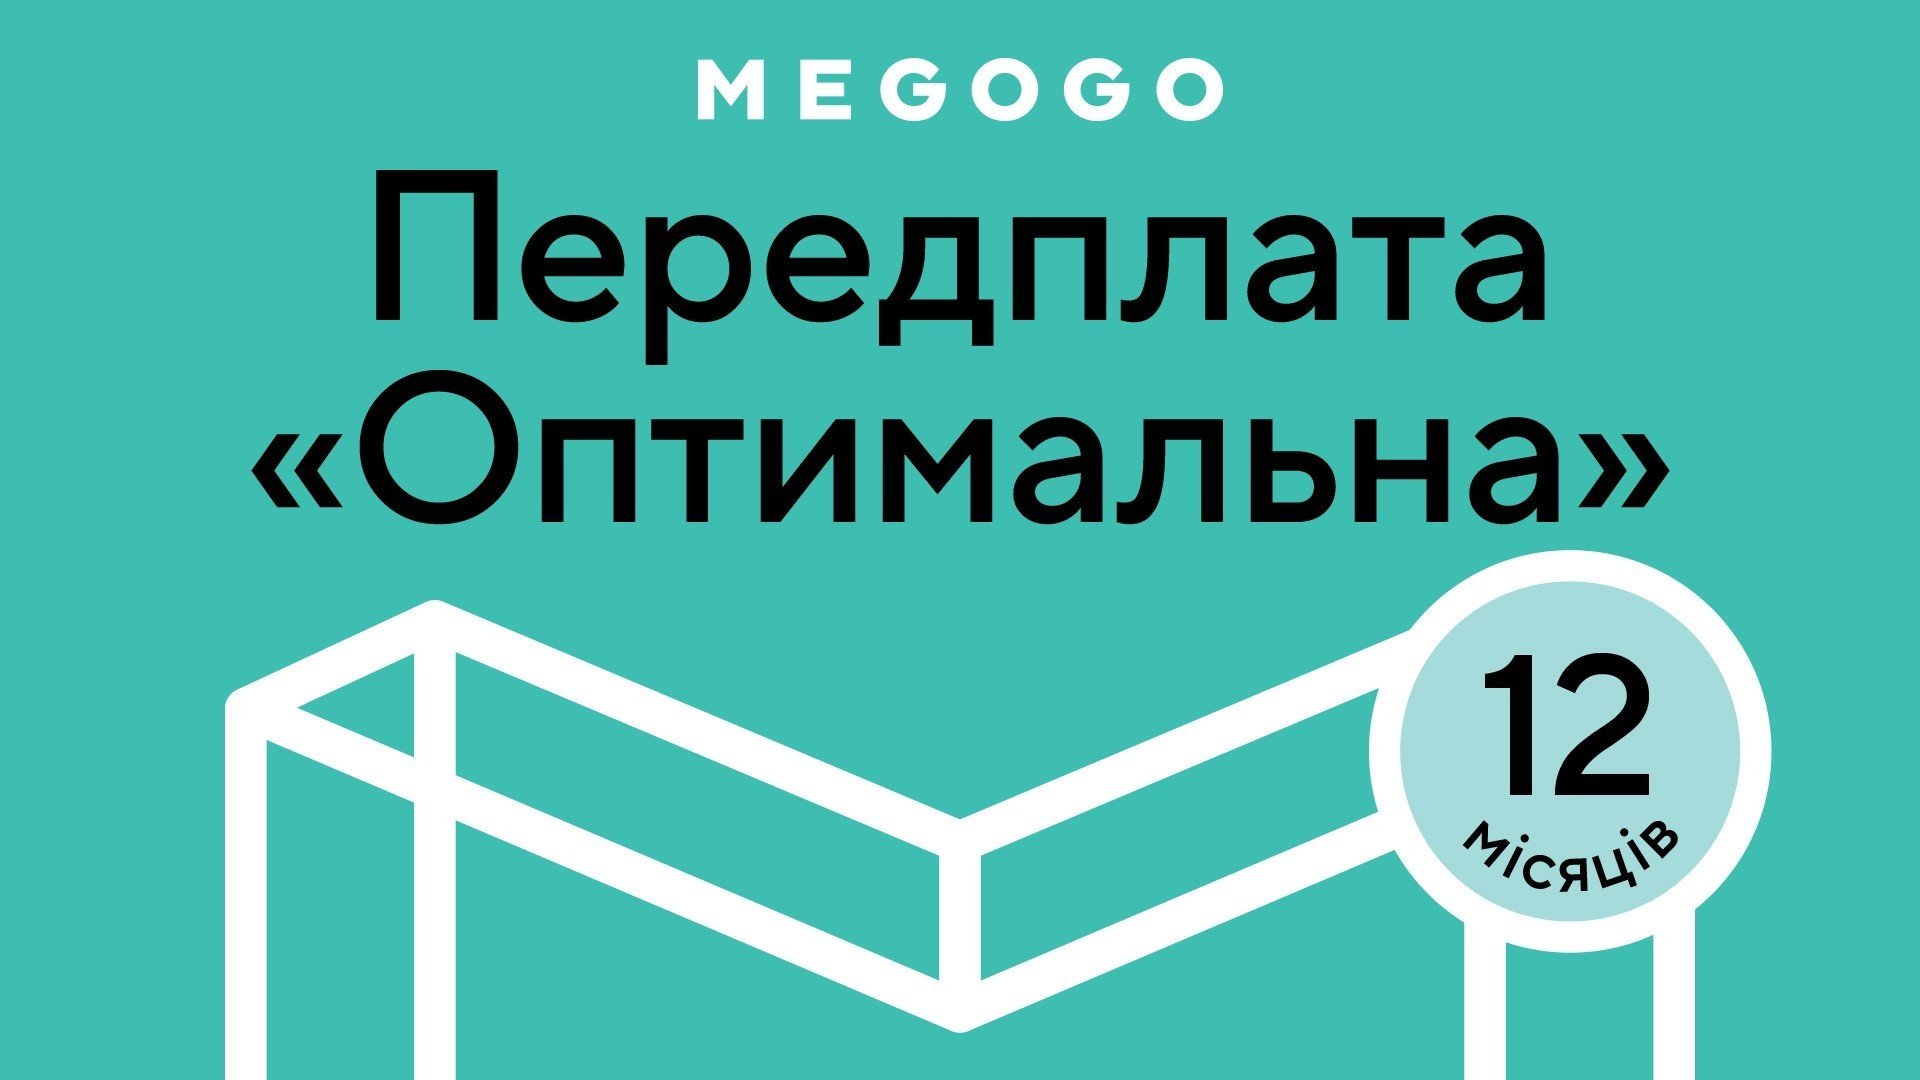 MEGOGO "Кіно і ТБ: Оптимальна" на 12 міс - samsungshop.com.ua